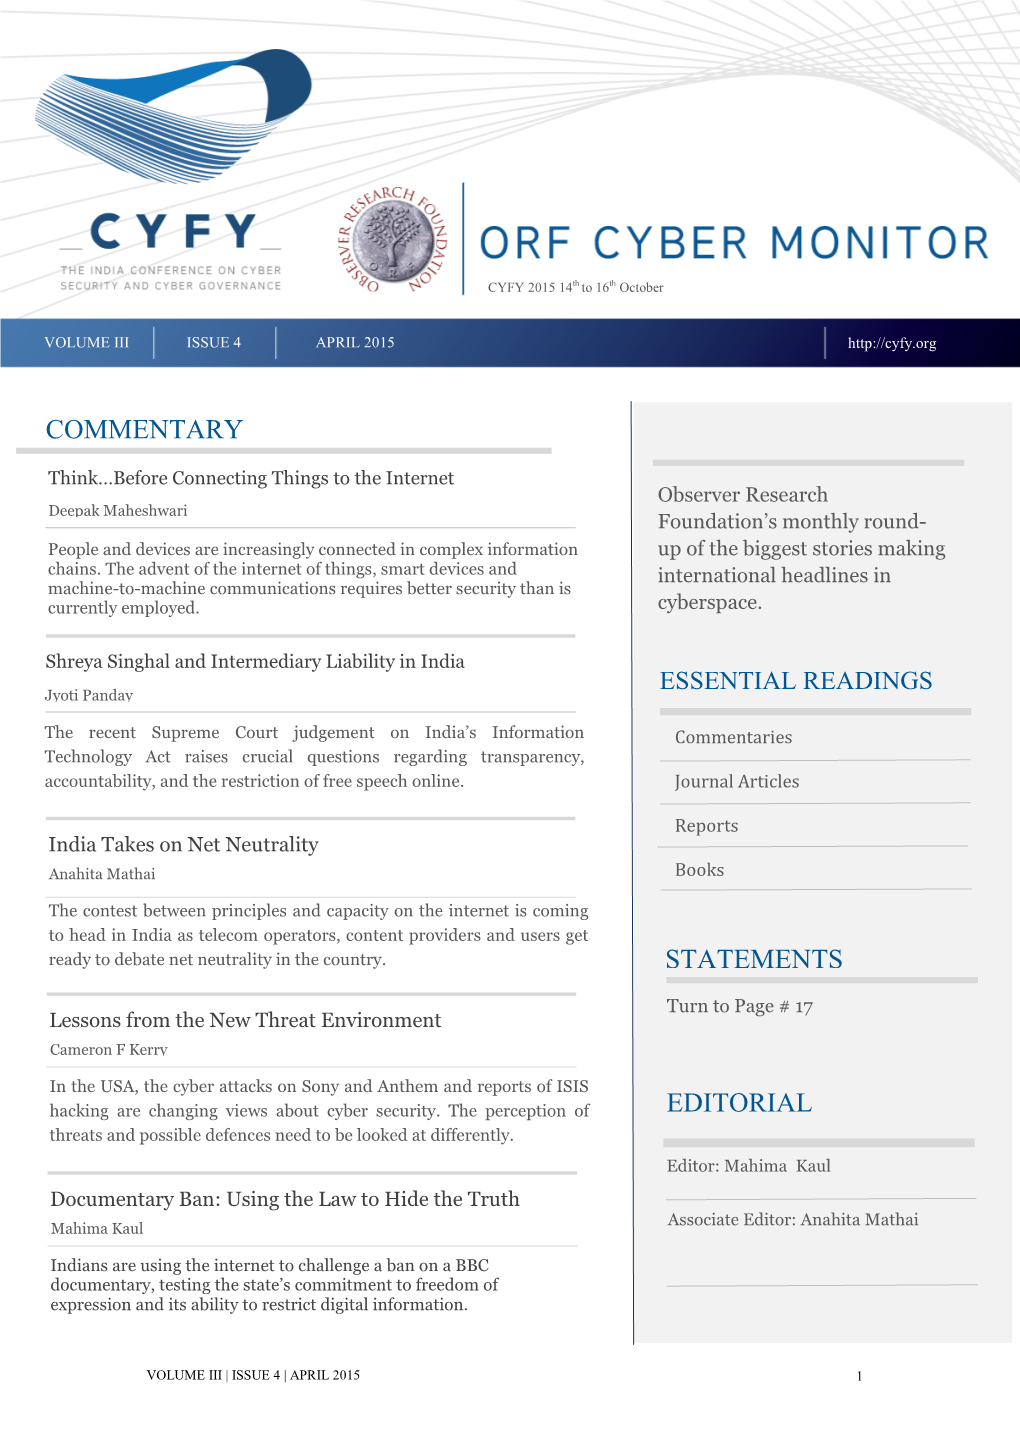 Cyber Monitor